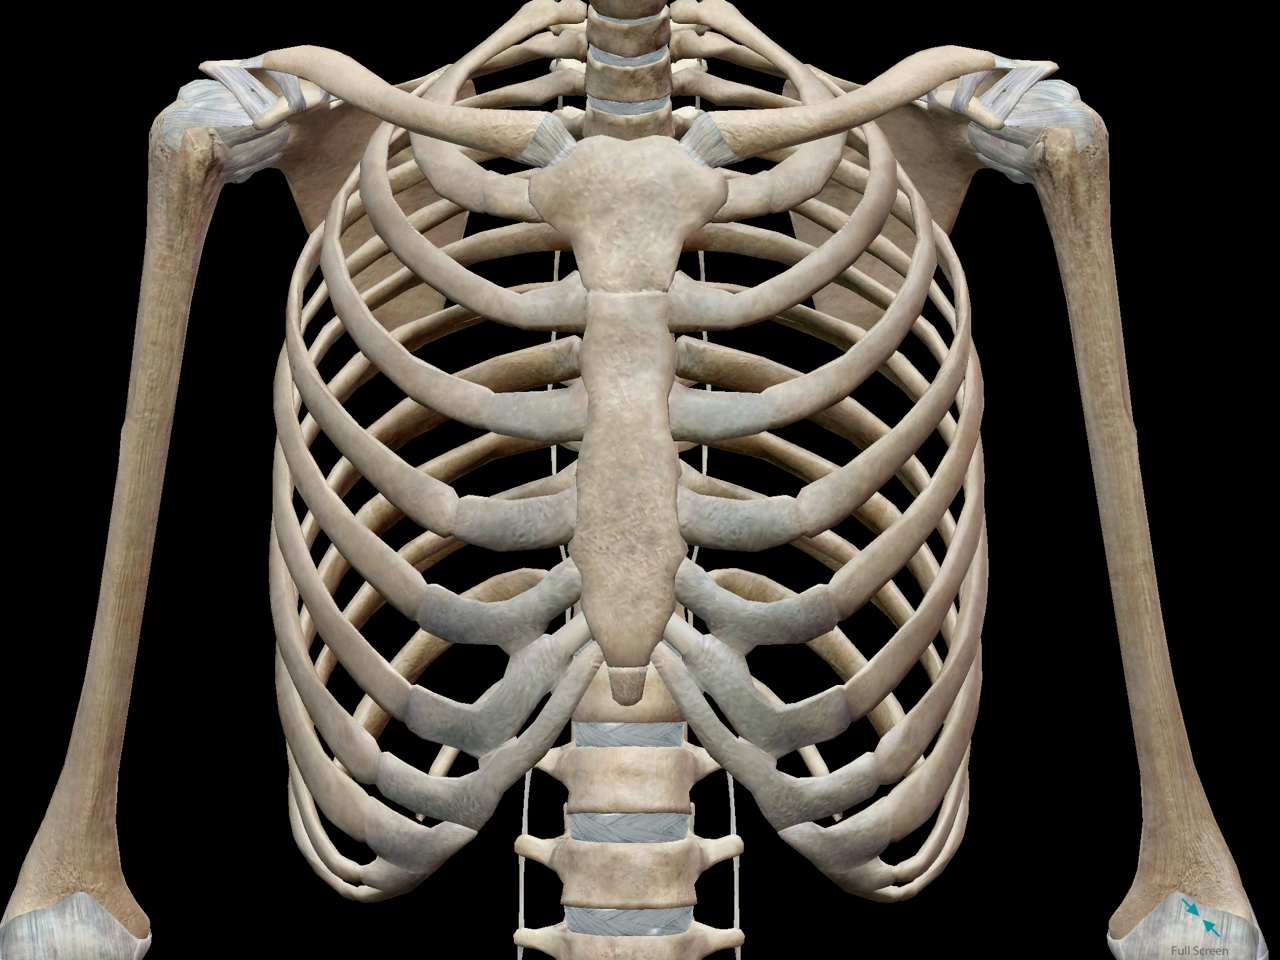 Anatomy Diagram Rib Area / Illustration Human Chest Ribs And Organs #8251677 Framed ...